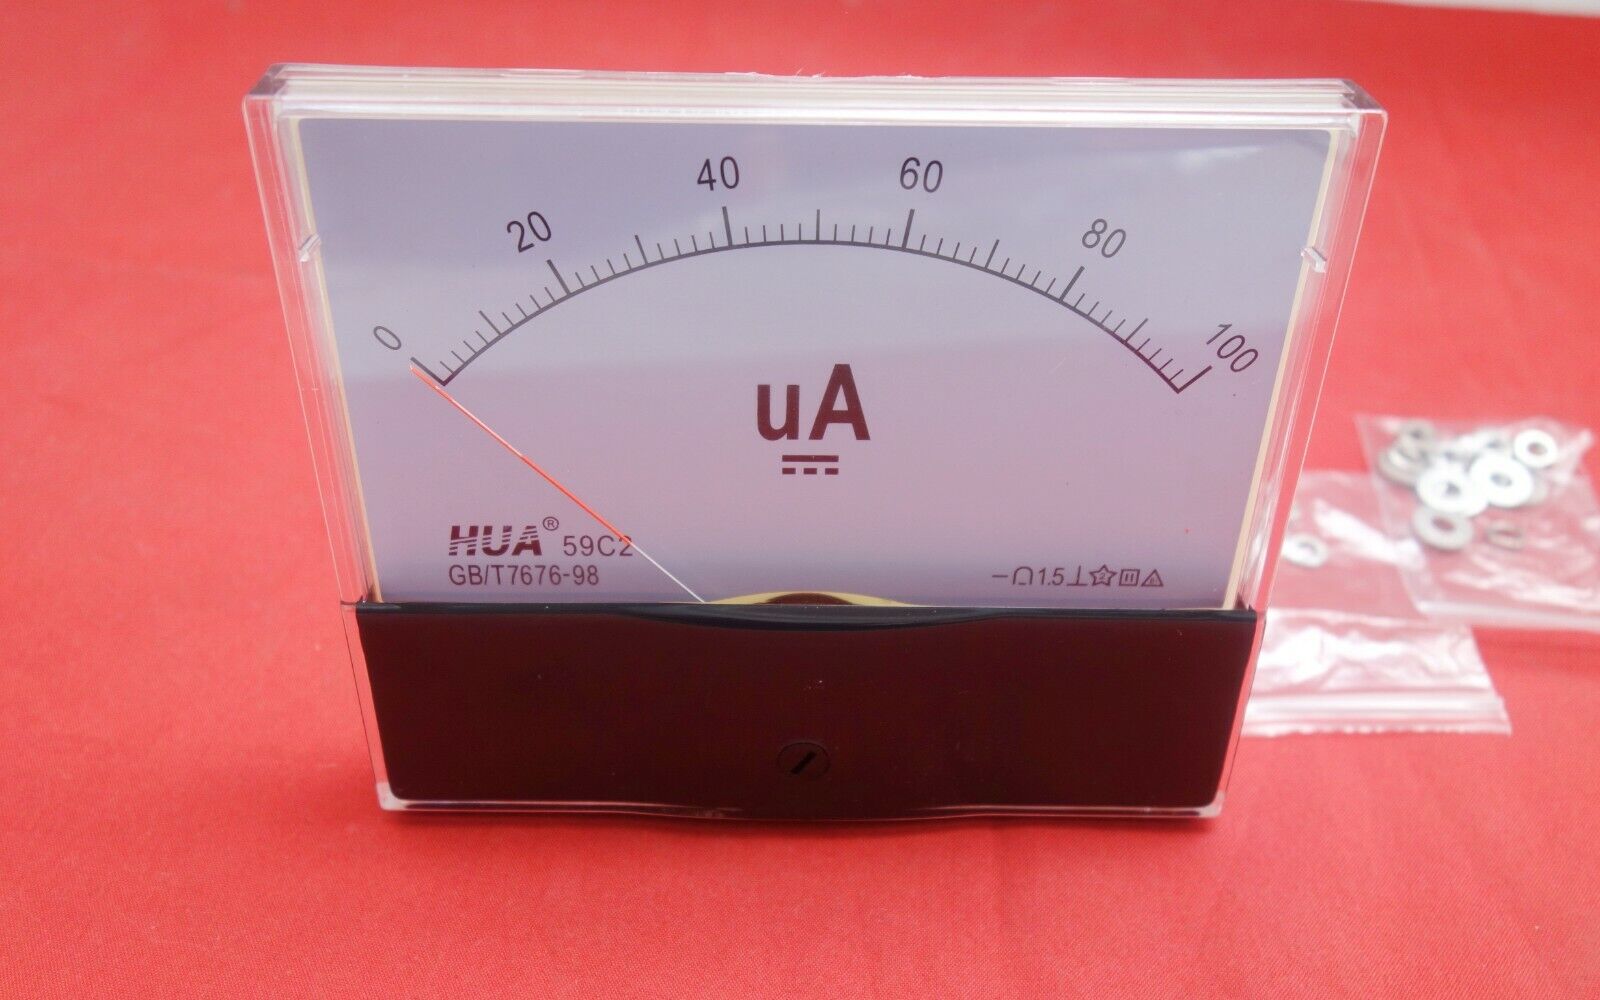 1PC DC 0-100uA Analog Ammeter Panel AMP Current Meter 100x120mm 59C2 